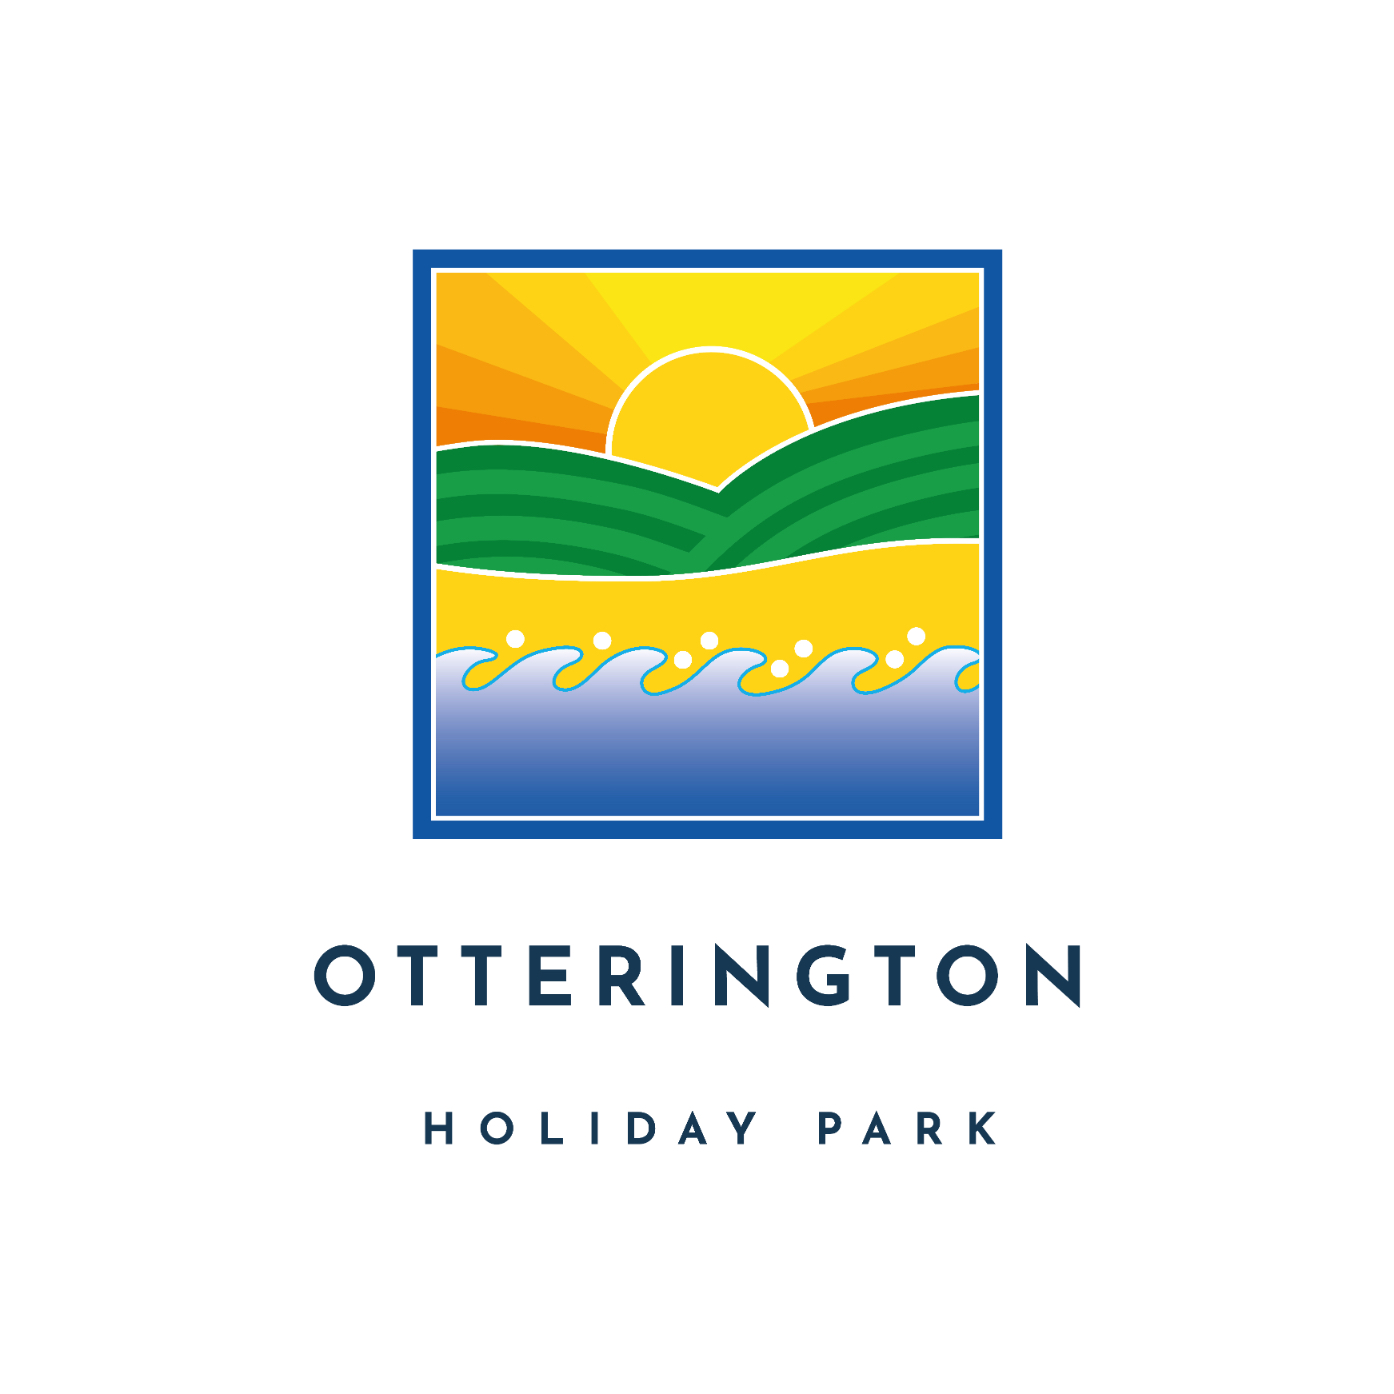 Otterington Holiday Park